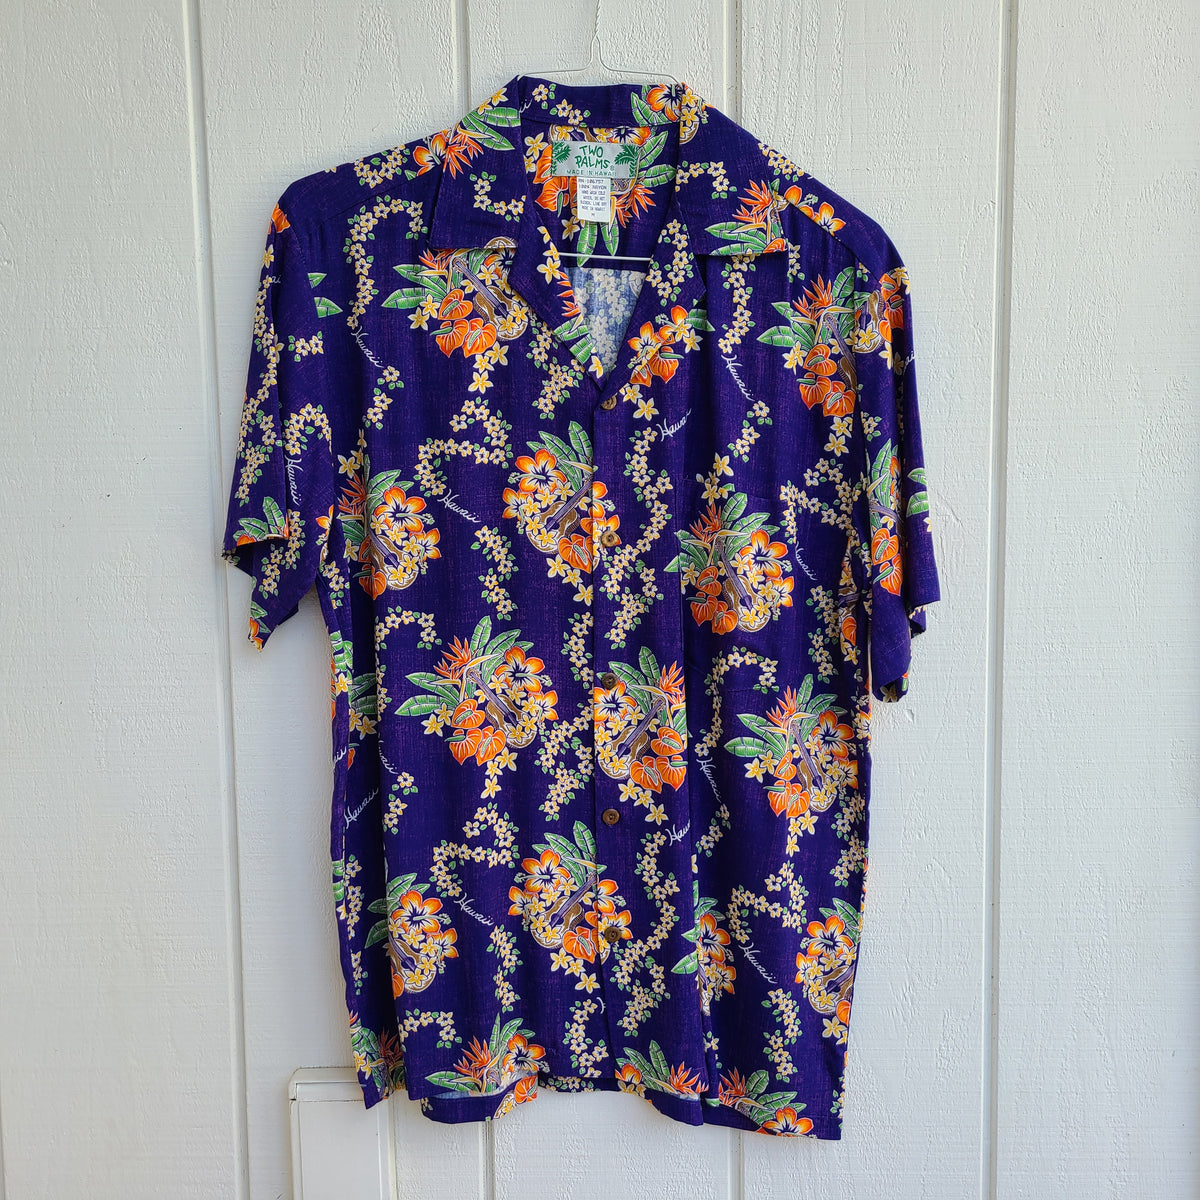 Men's Hawaii Rayon Shirt Mini Plumeria